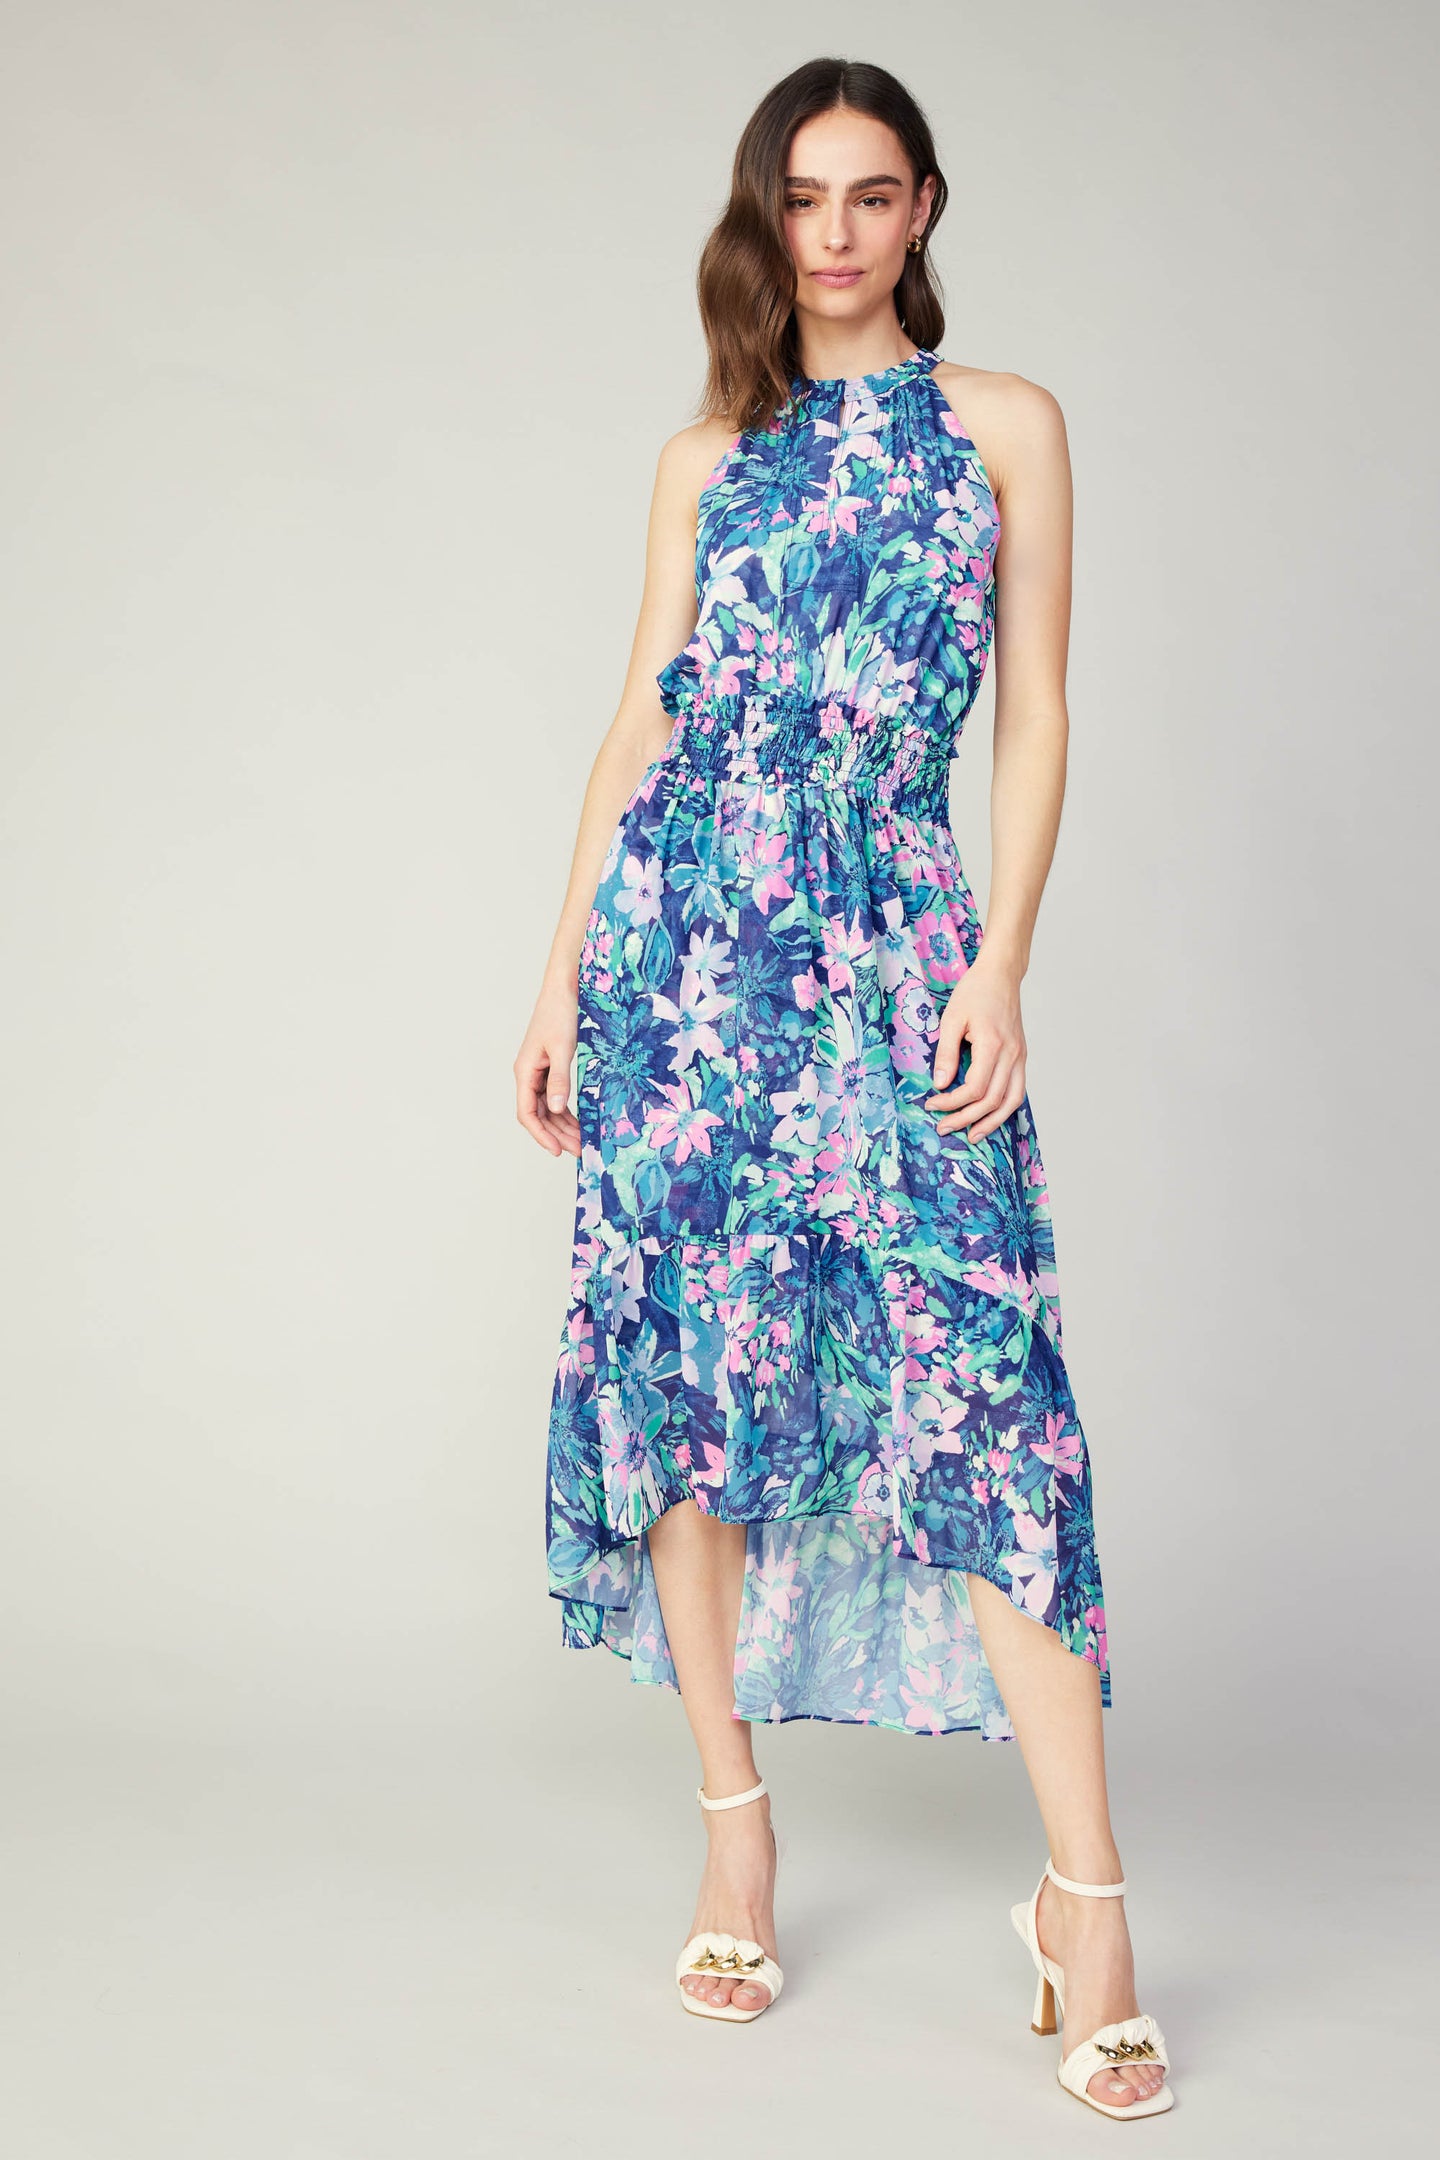 Painterly Floral Asymmetric Dress